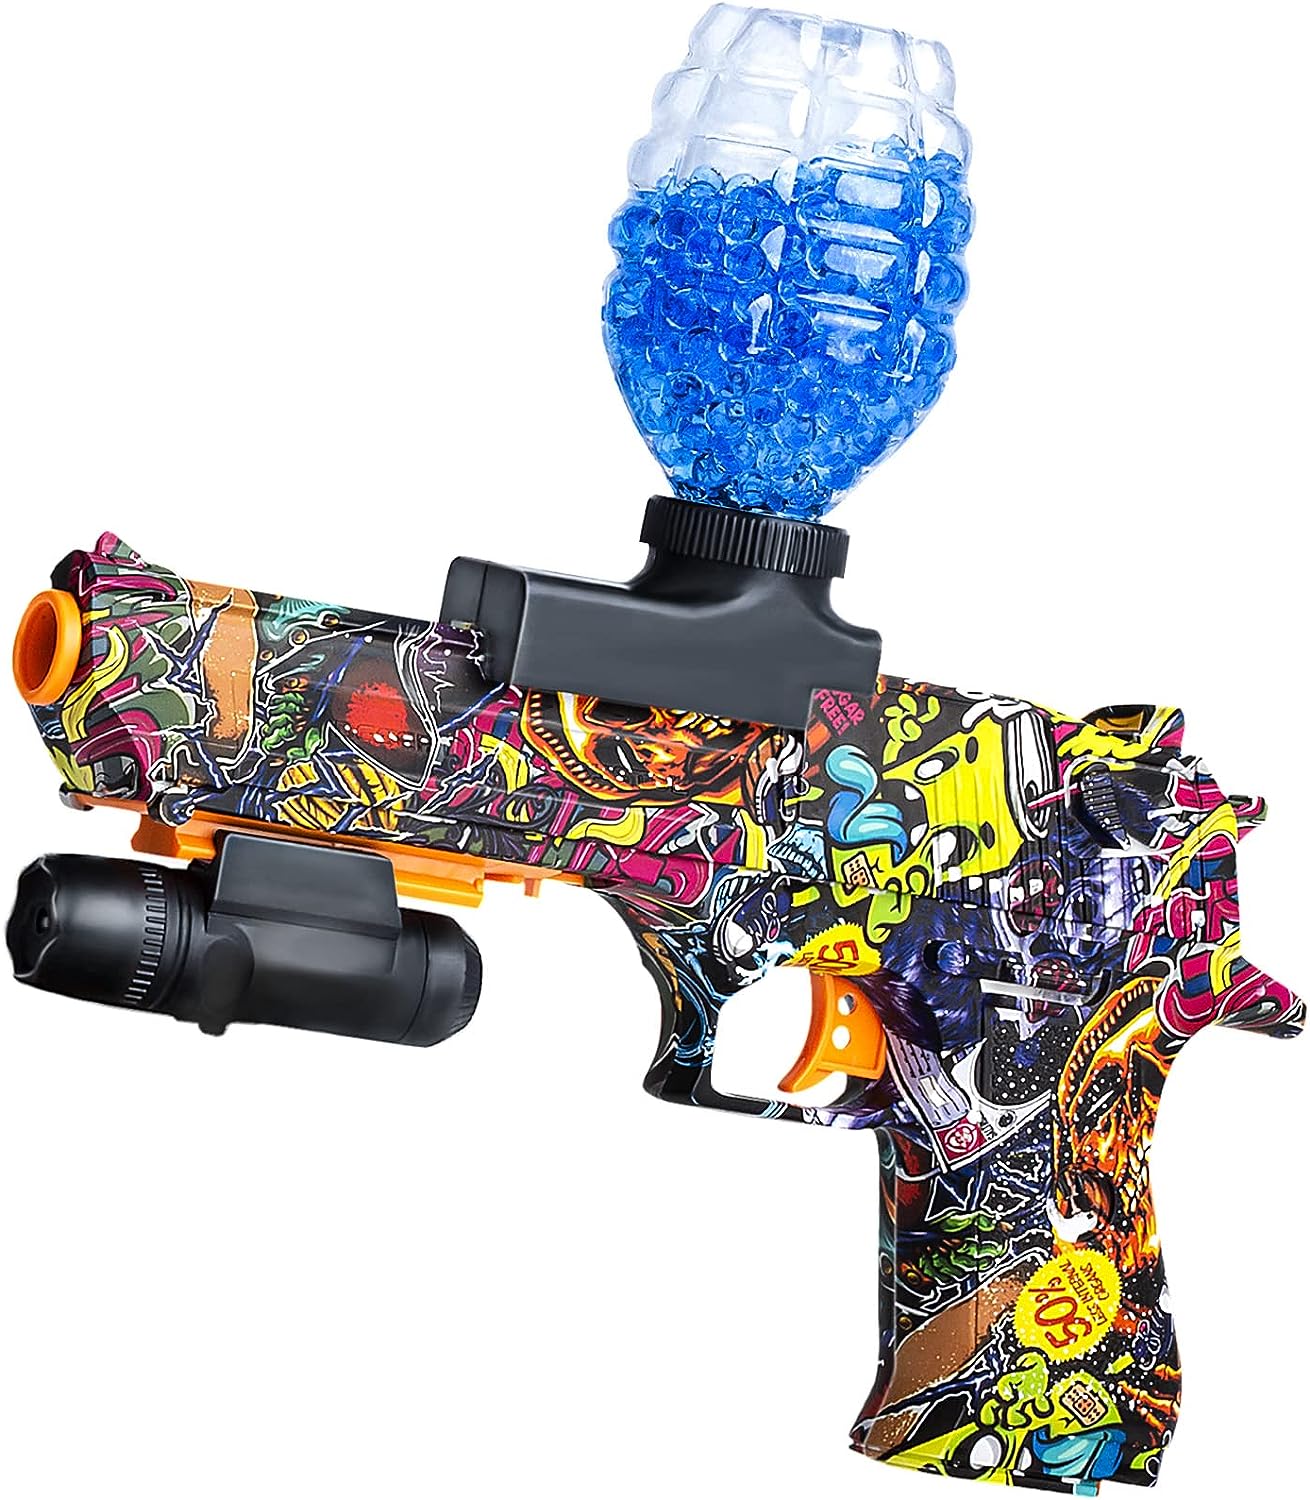 Anstoy Gel Ball Orbeez Gun with graffiti on it.